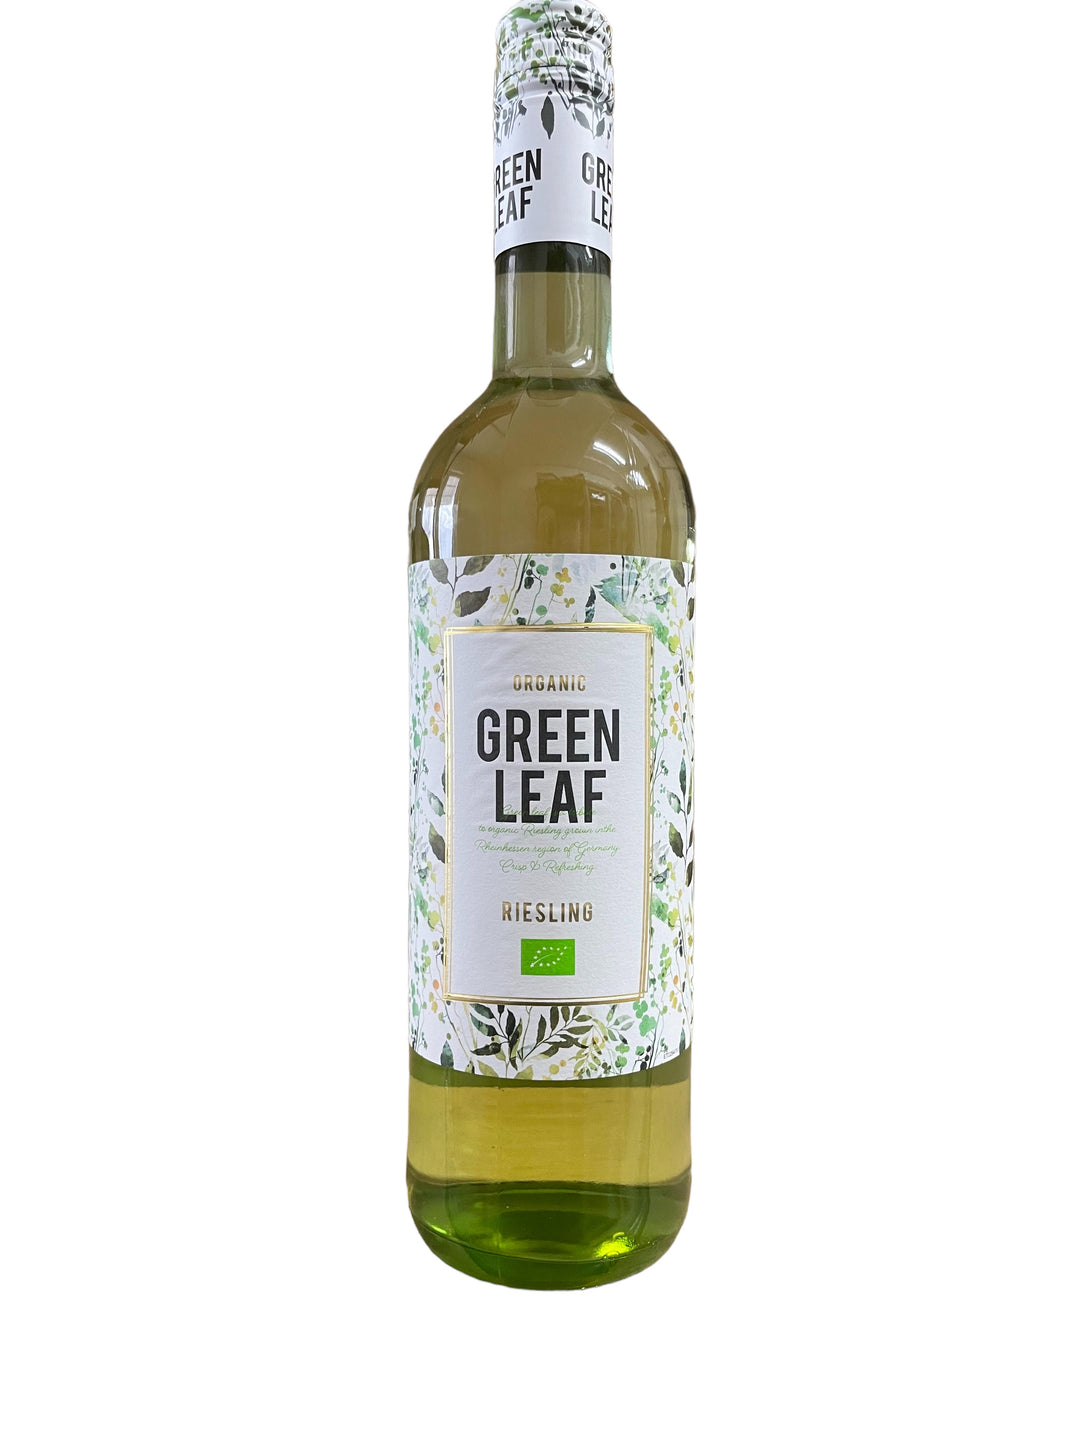 Belo vino riesling GREEN LEAF ORGANIC 0,75l